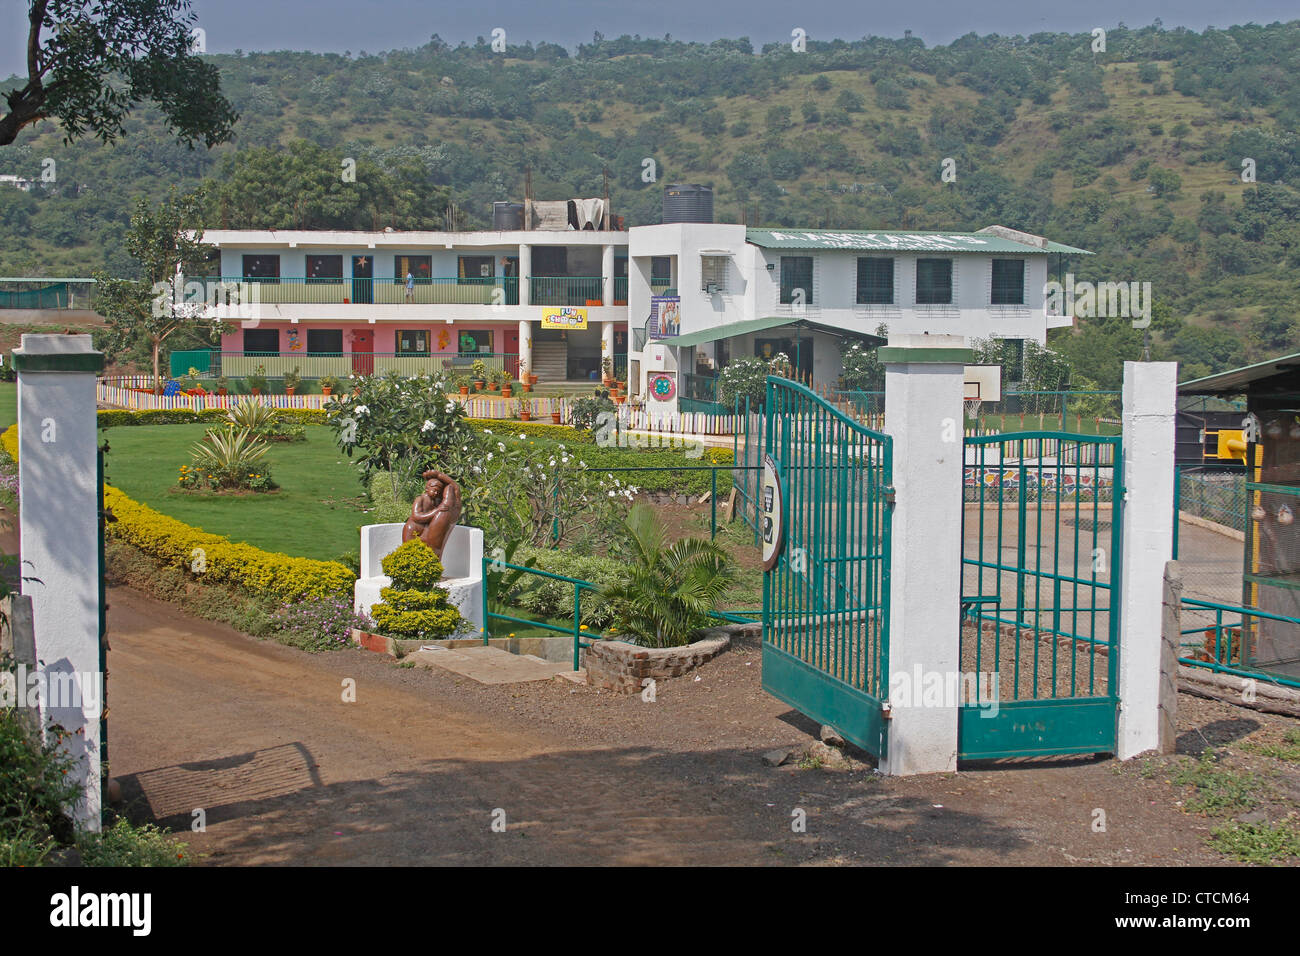 El Campus de la escuela primaria, Pune, Maharashtra, India Foto de stock